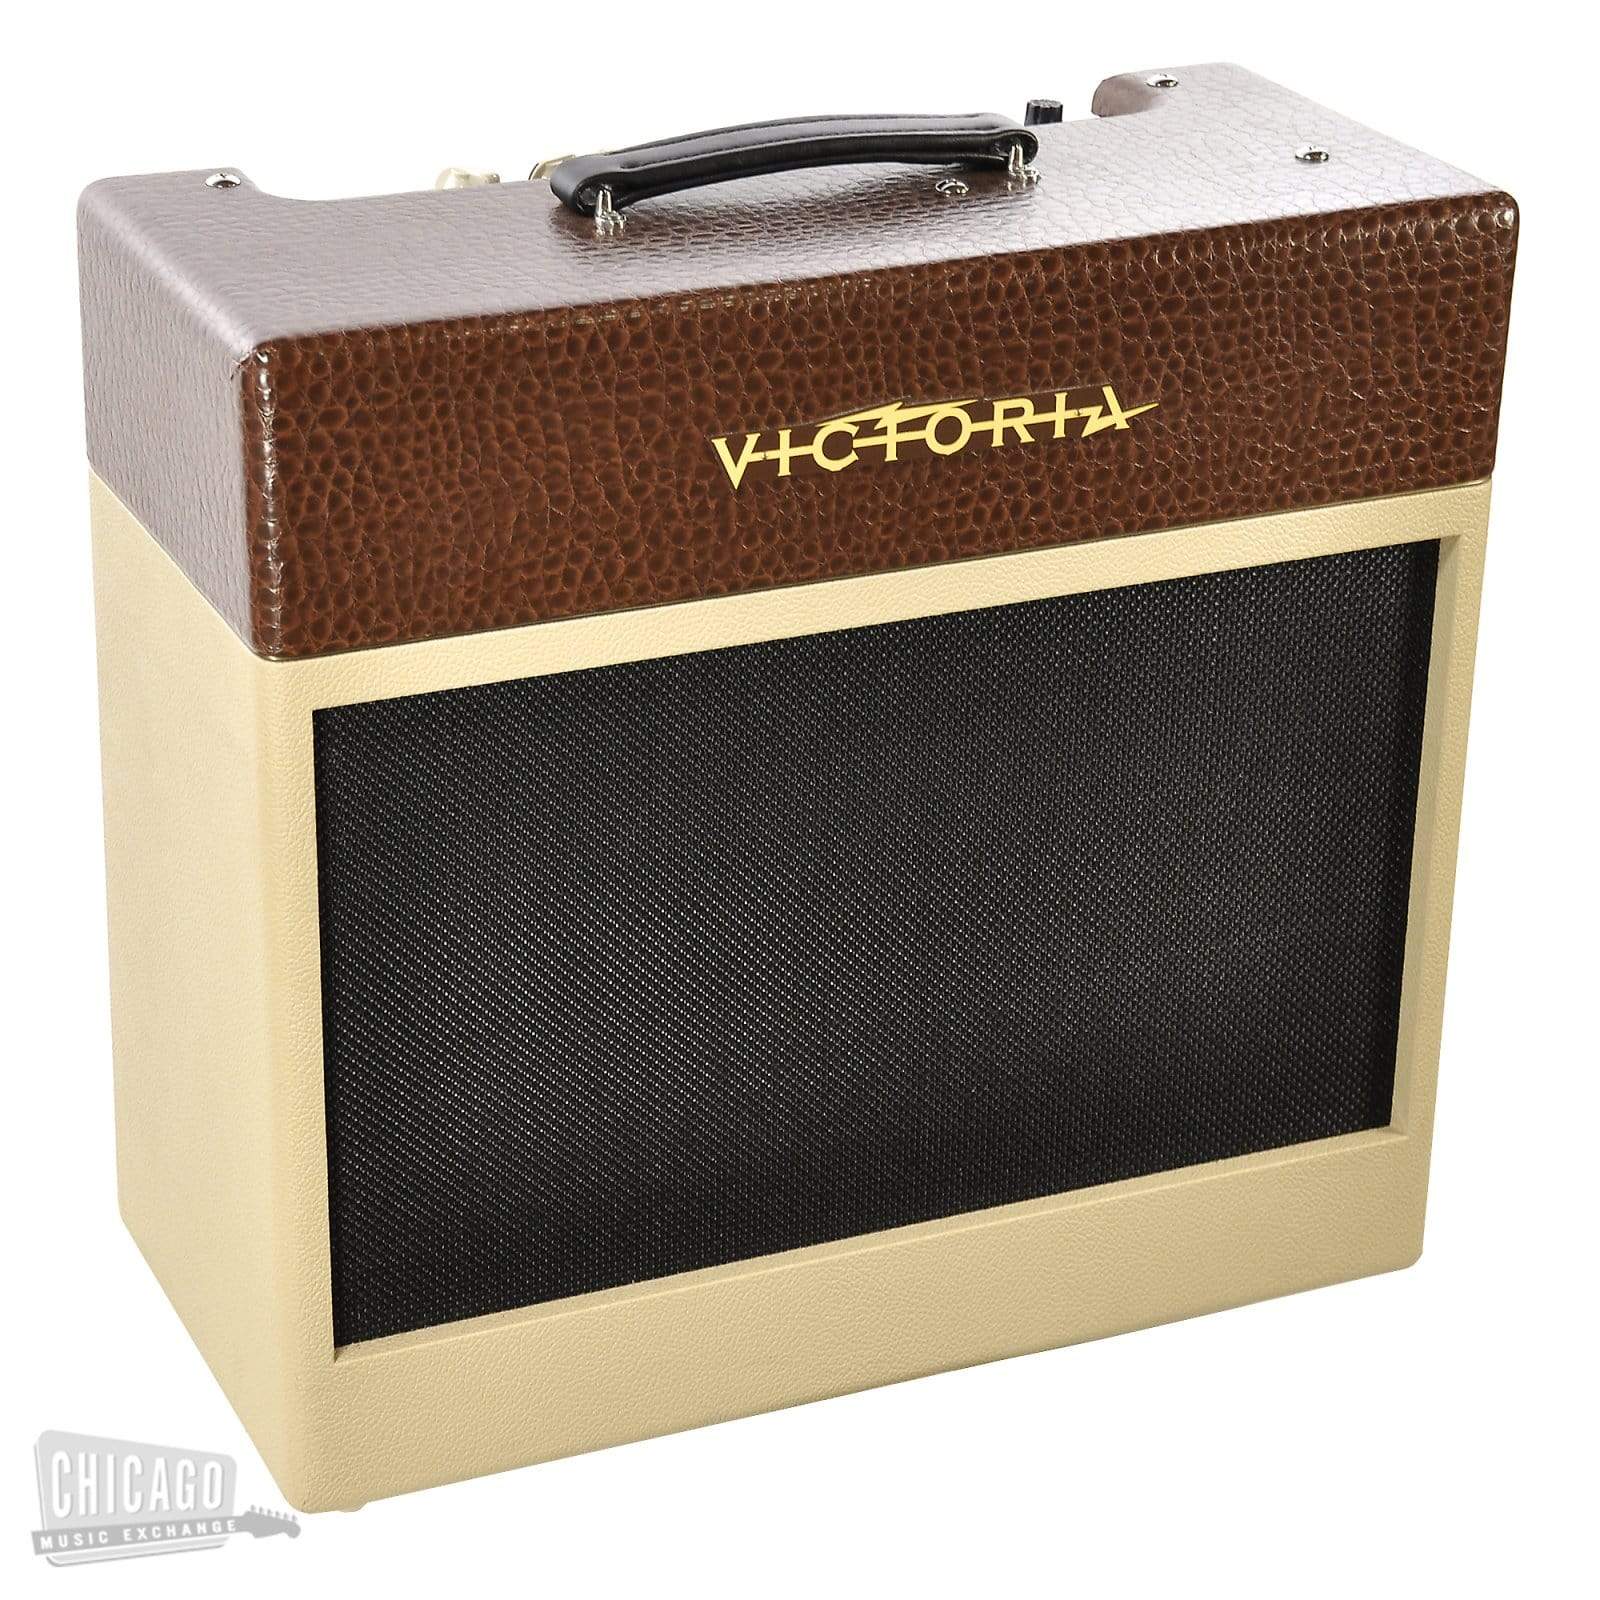 Victoria Cherry Bomb 1x15 40w Combo Amps / Guitar Combos